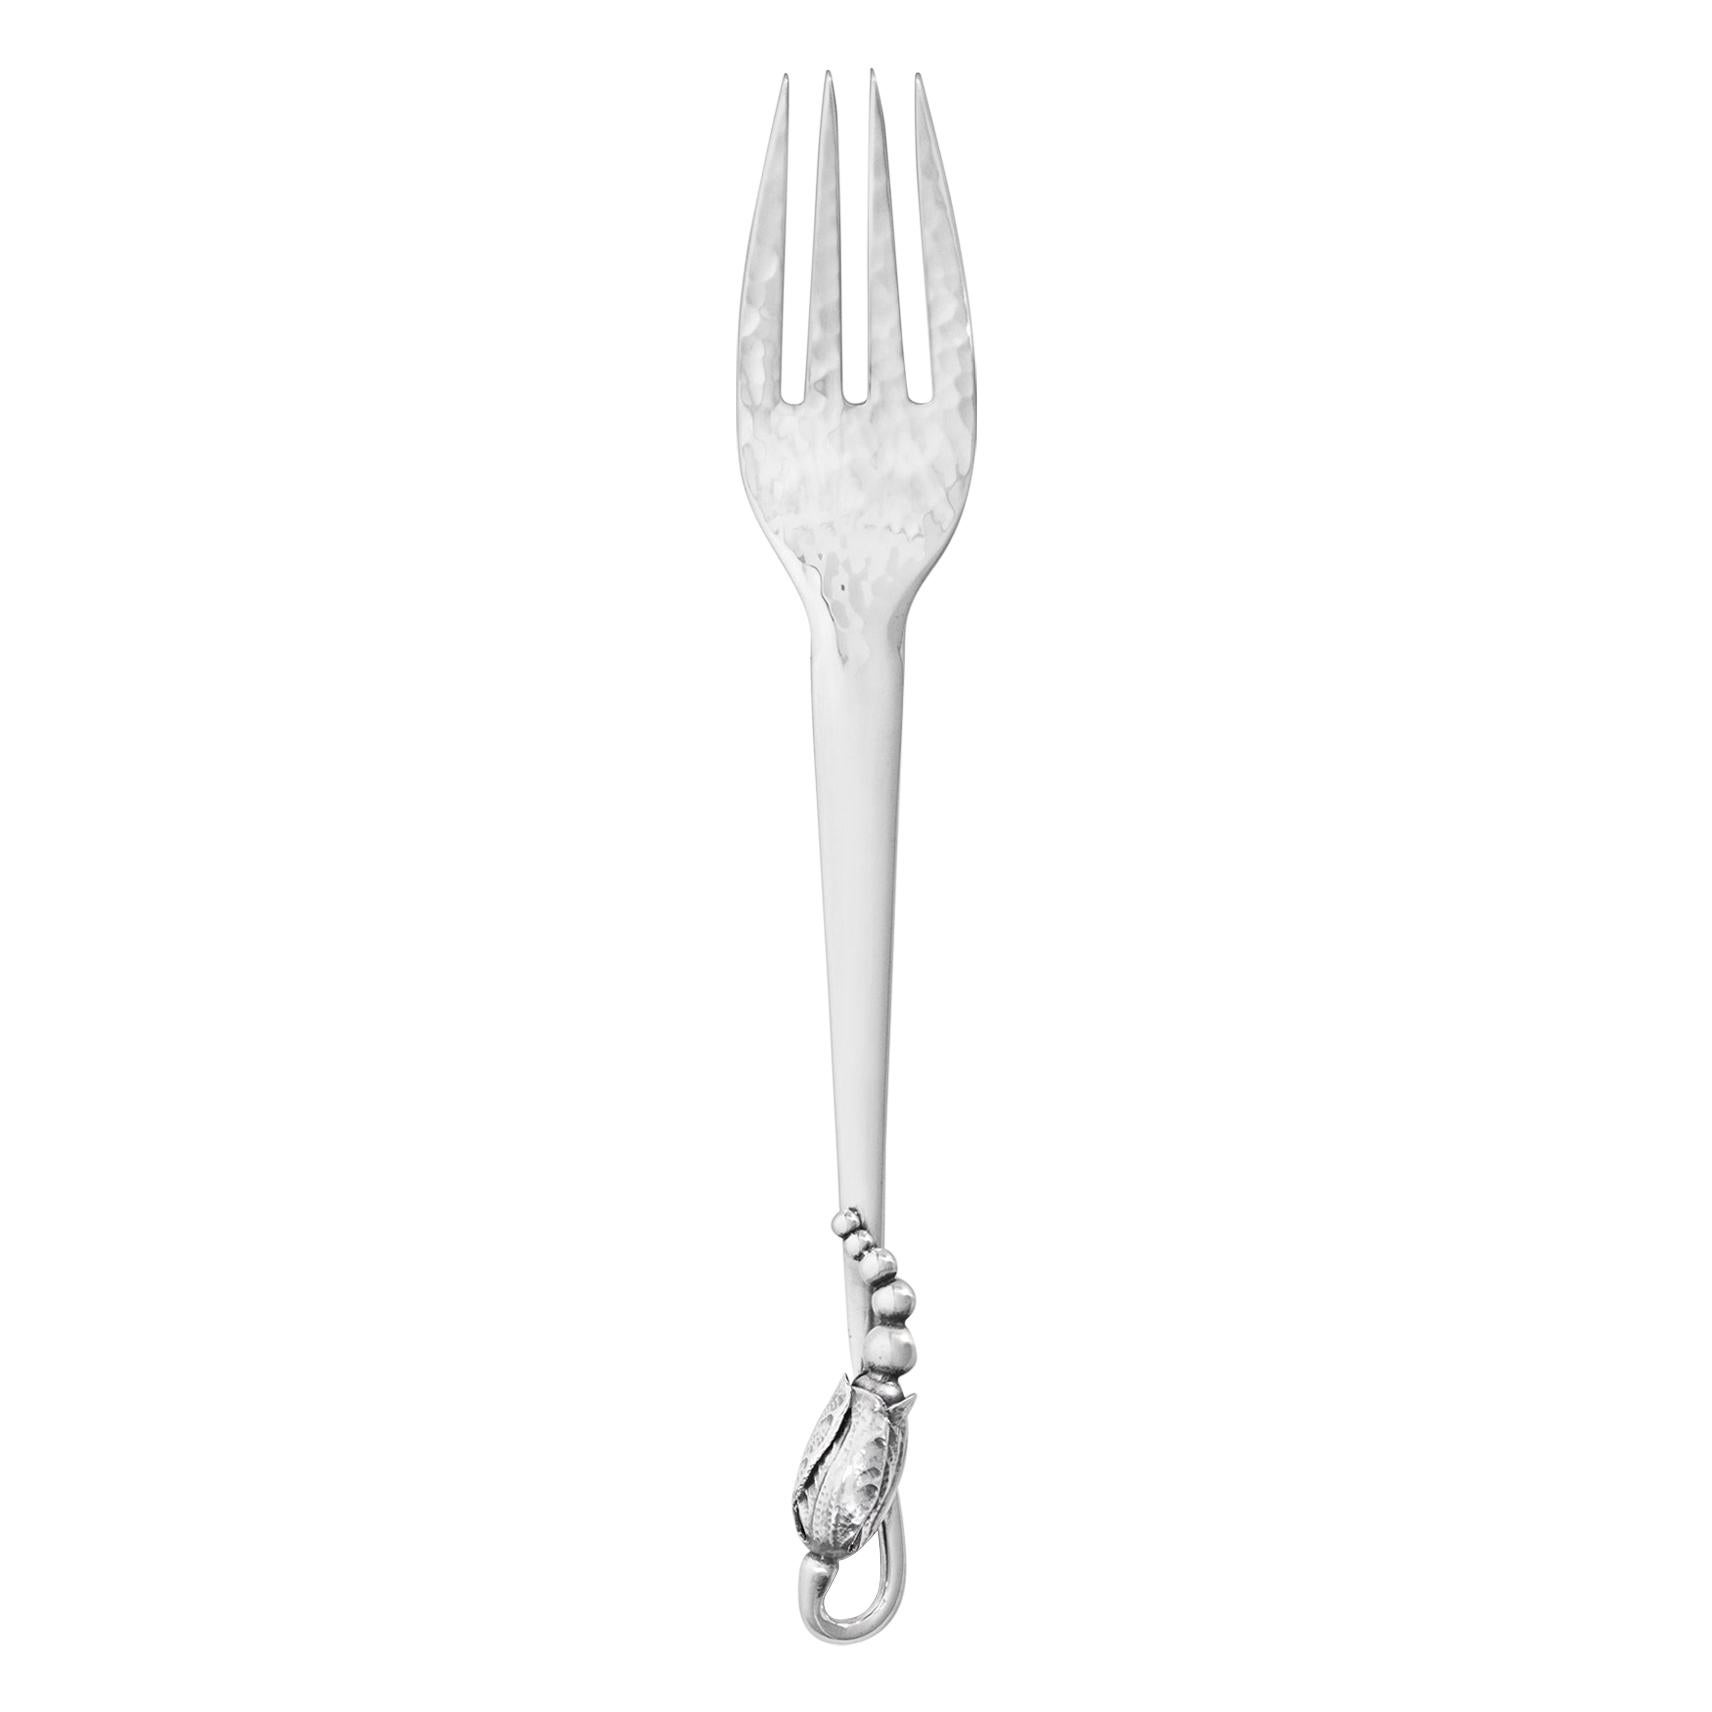 Georg Jensen Handcrafted Sterling Silver Blossom Child's Fork For Sale